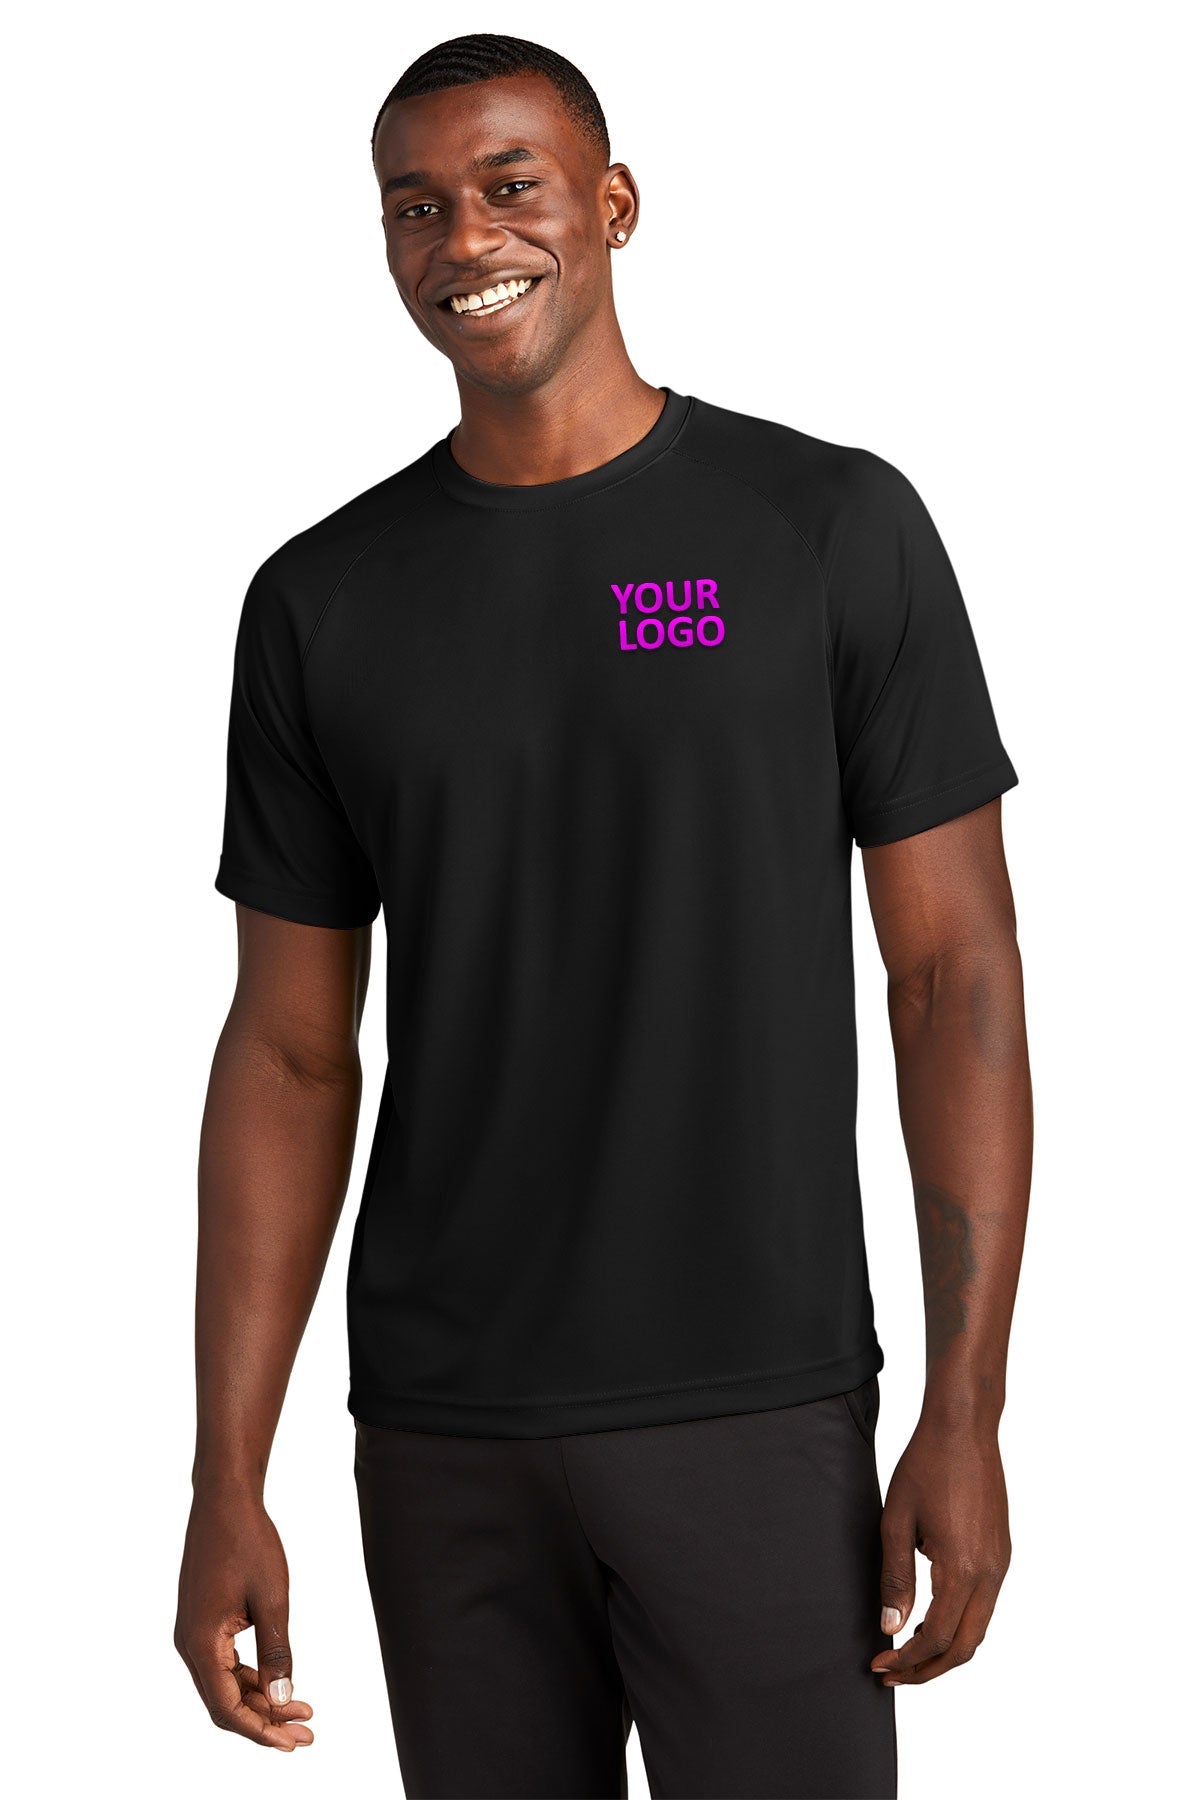 Sport-Tek Dry Zone Short Sleeve Customized Raglan T-Shirts, Black